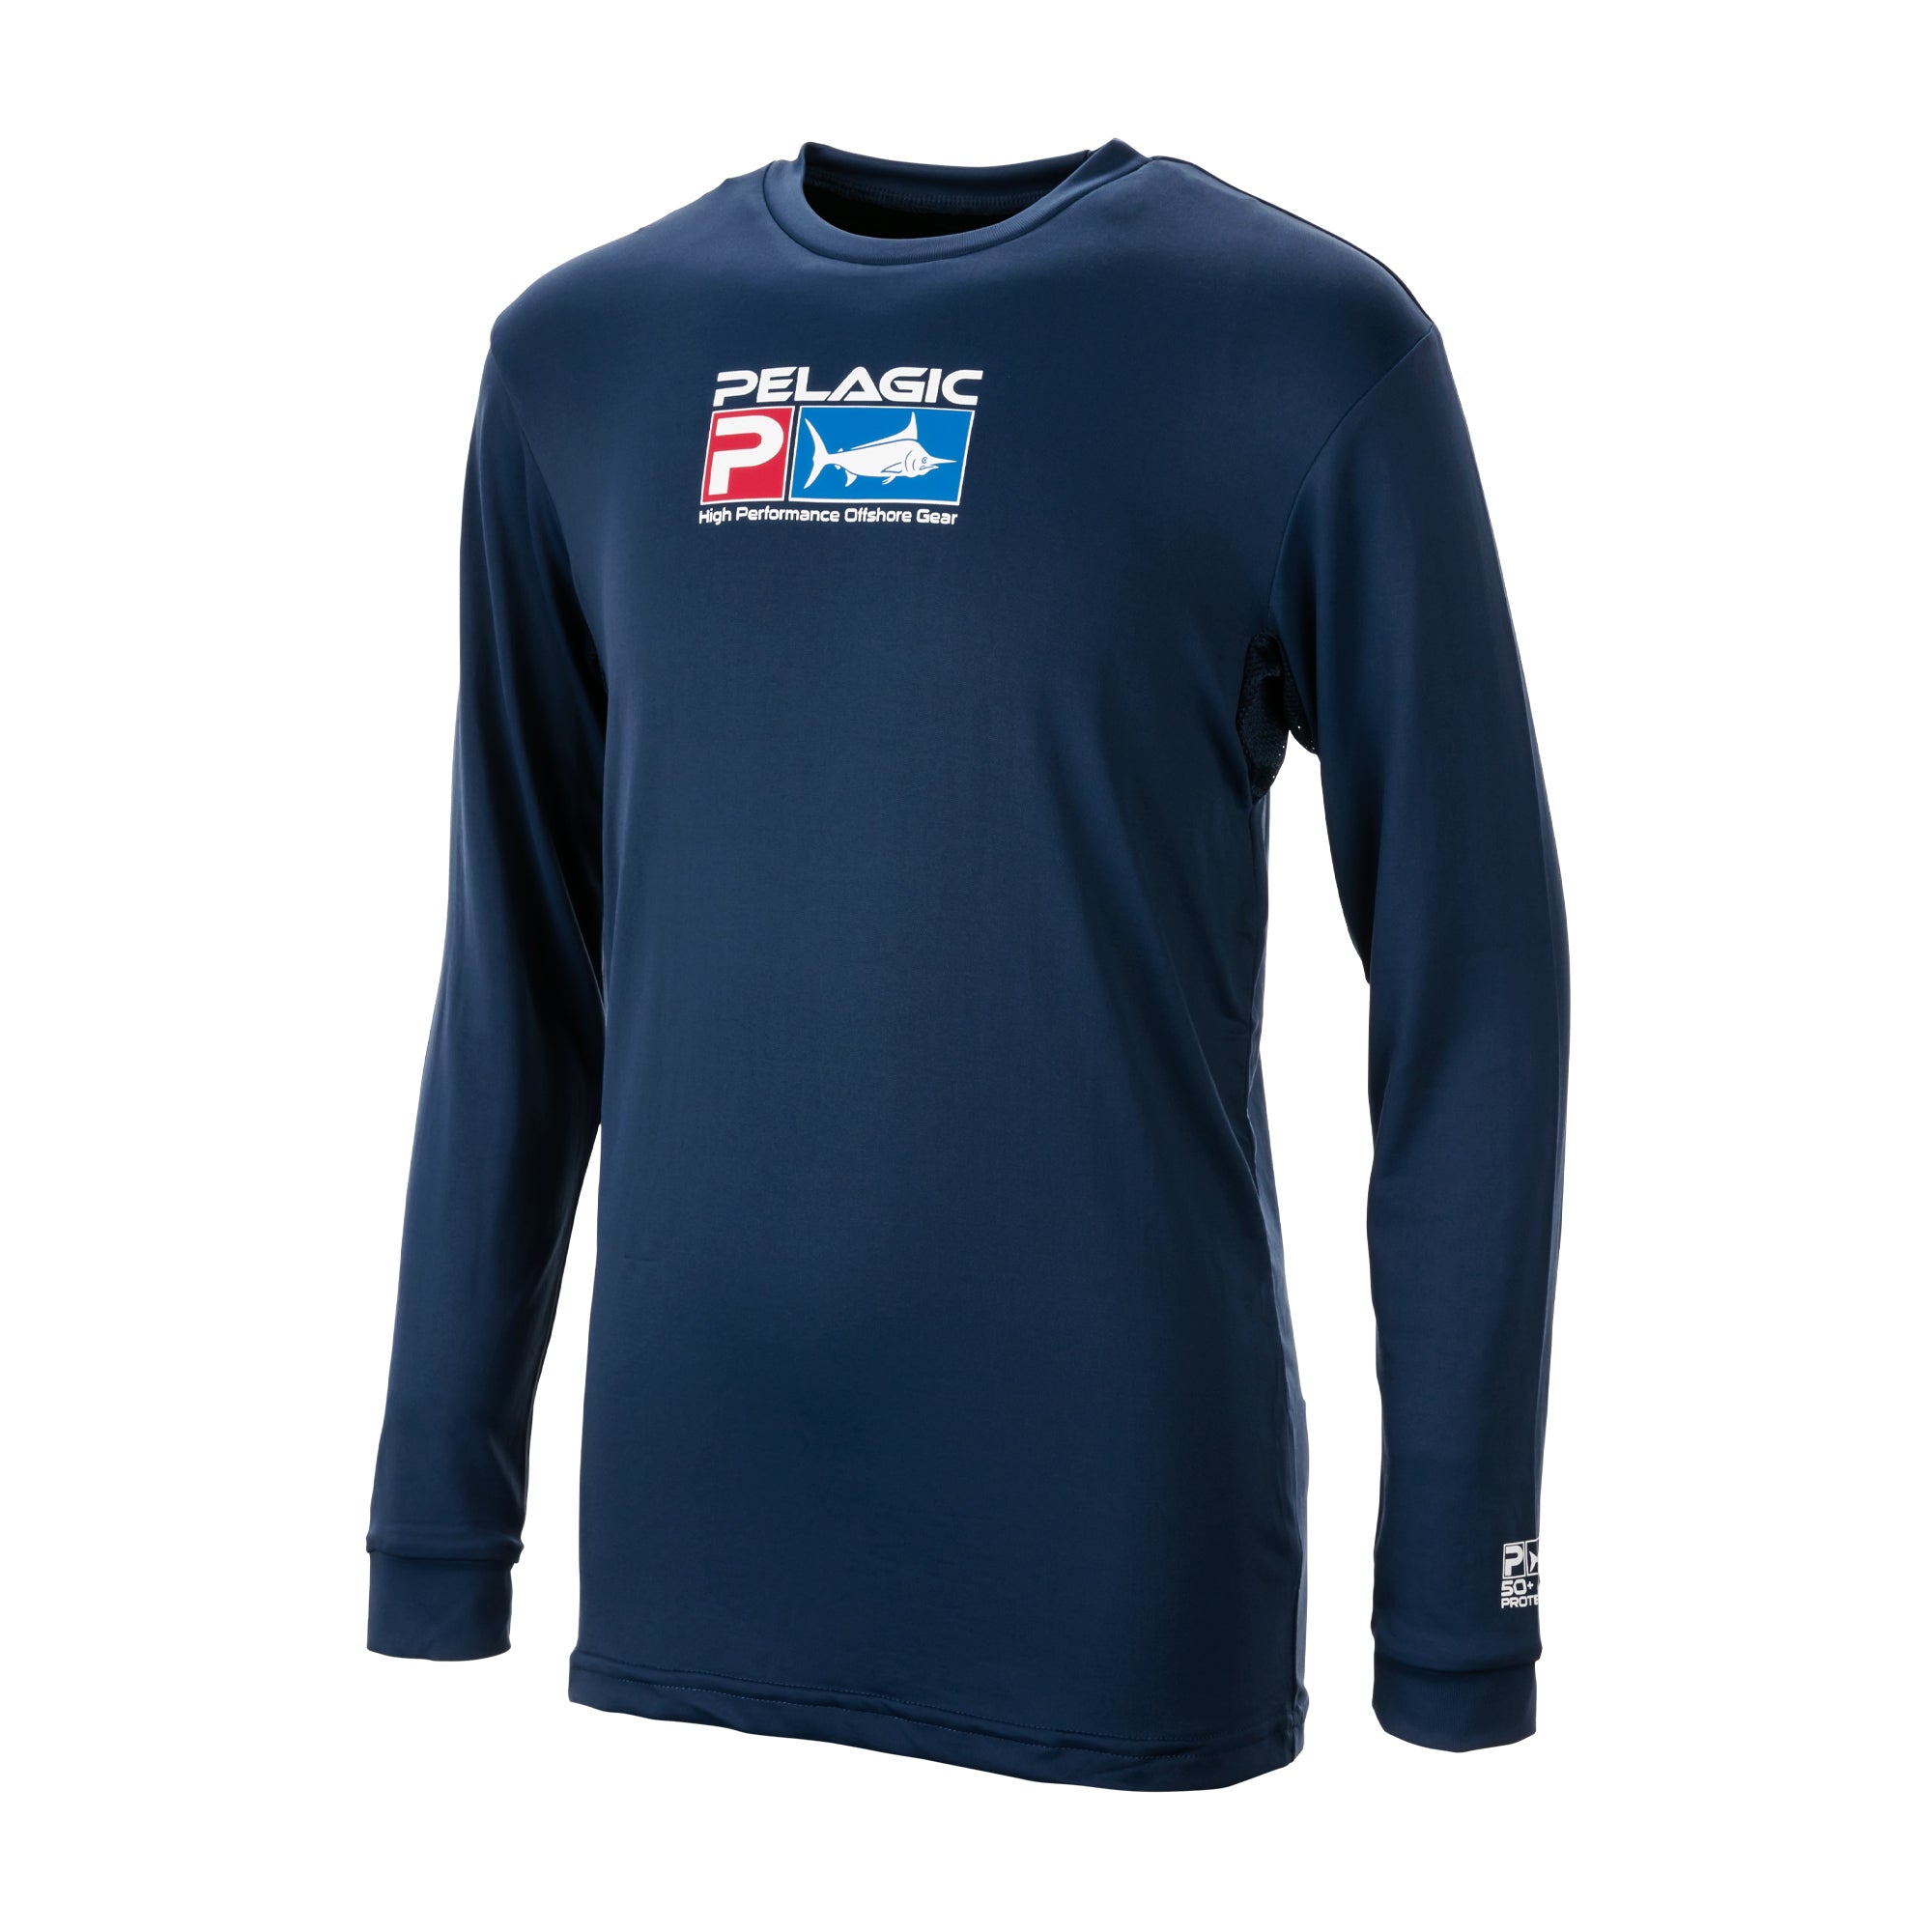 Pelagic High Performance Offshore Fishing Gear Navy Blue T-Shirt 2